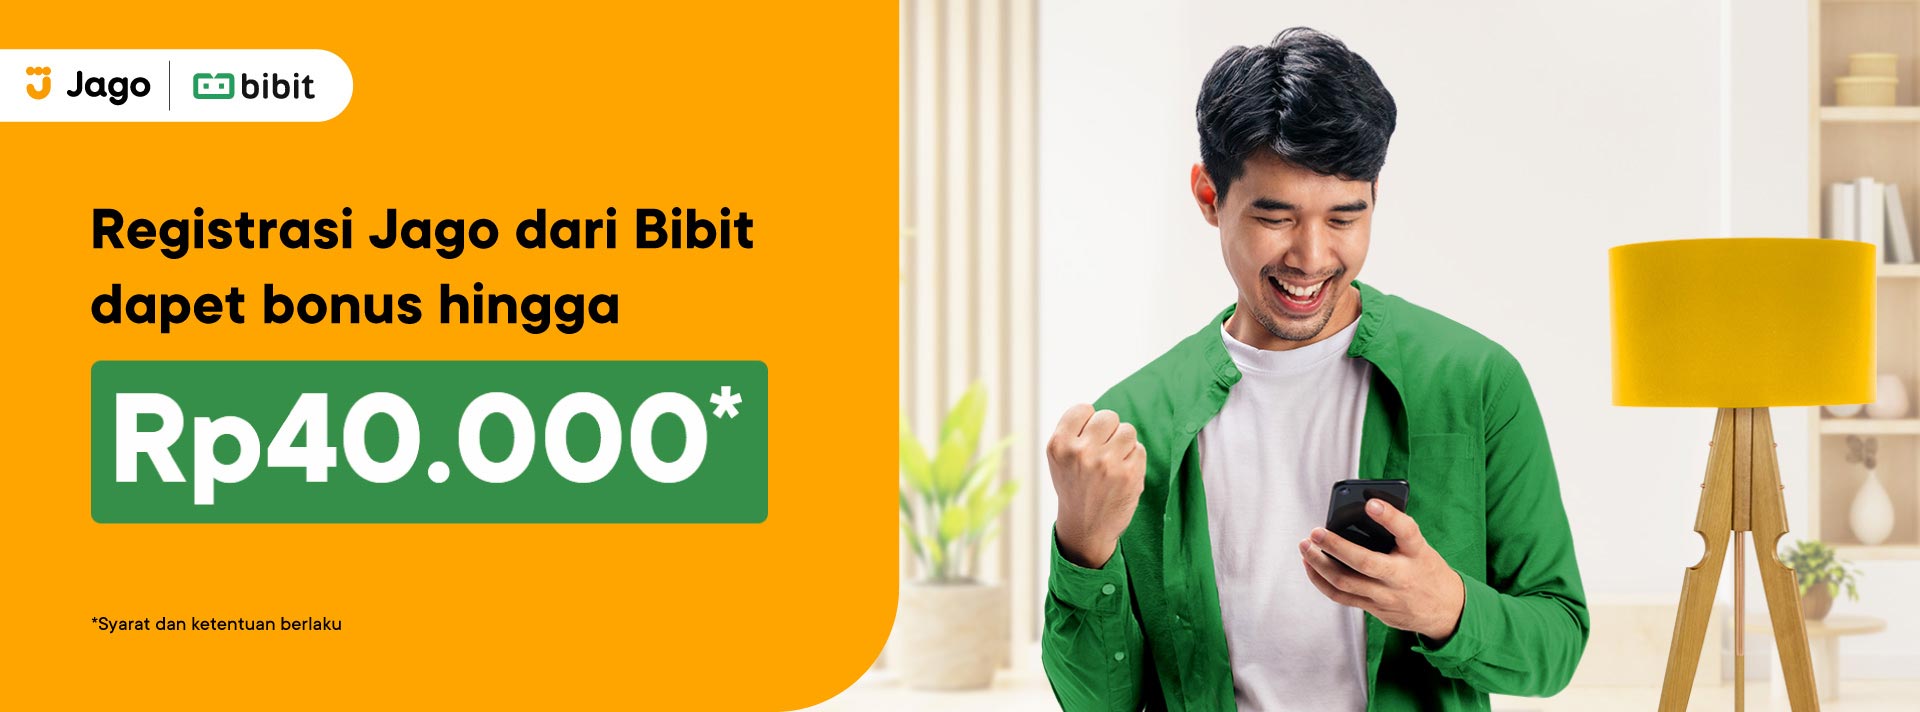 Registrasi Jago dari Bibit dapat Bonus hingga Rp40.000*